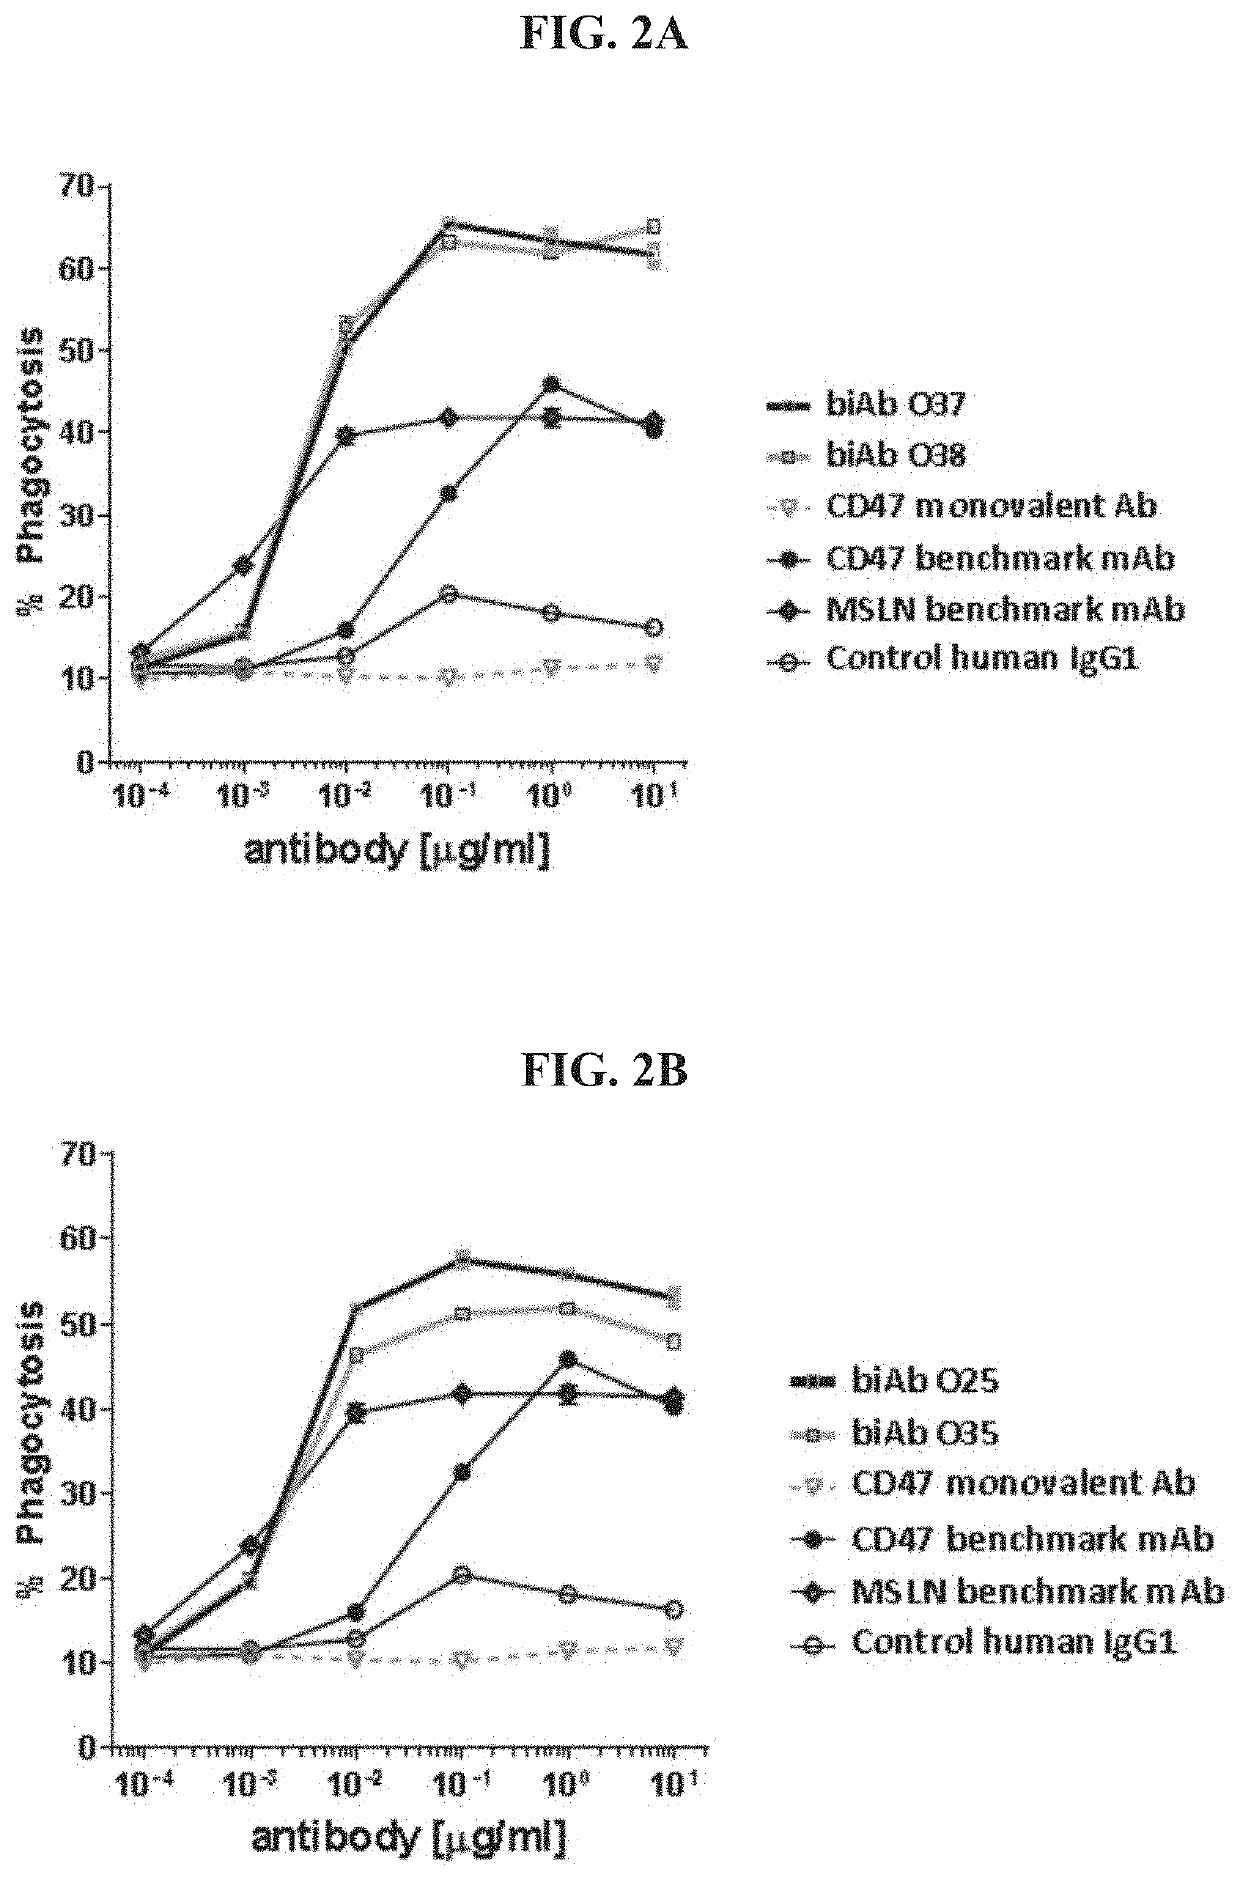 Anti-CD47 x anti-mesothelin antibodies and methods of use thereof